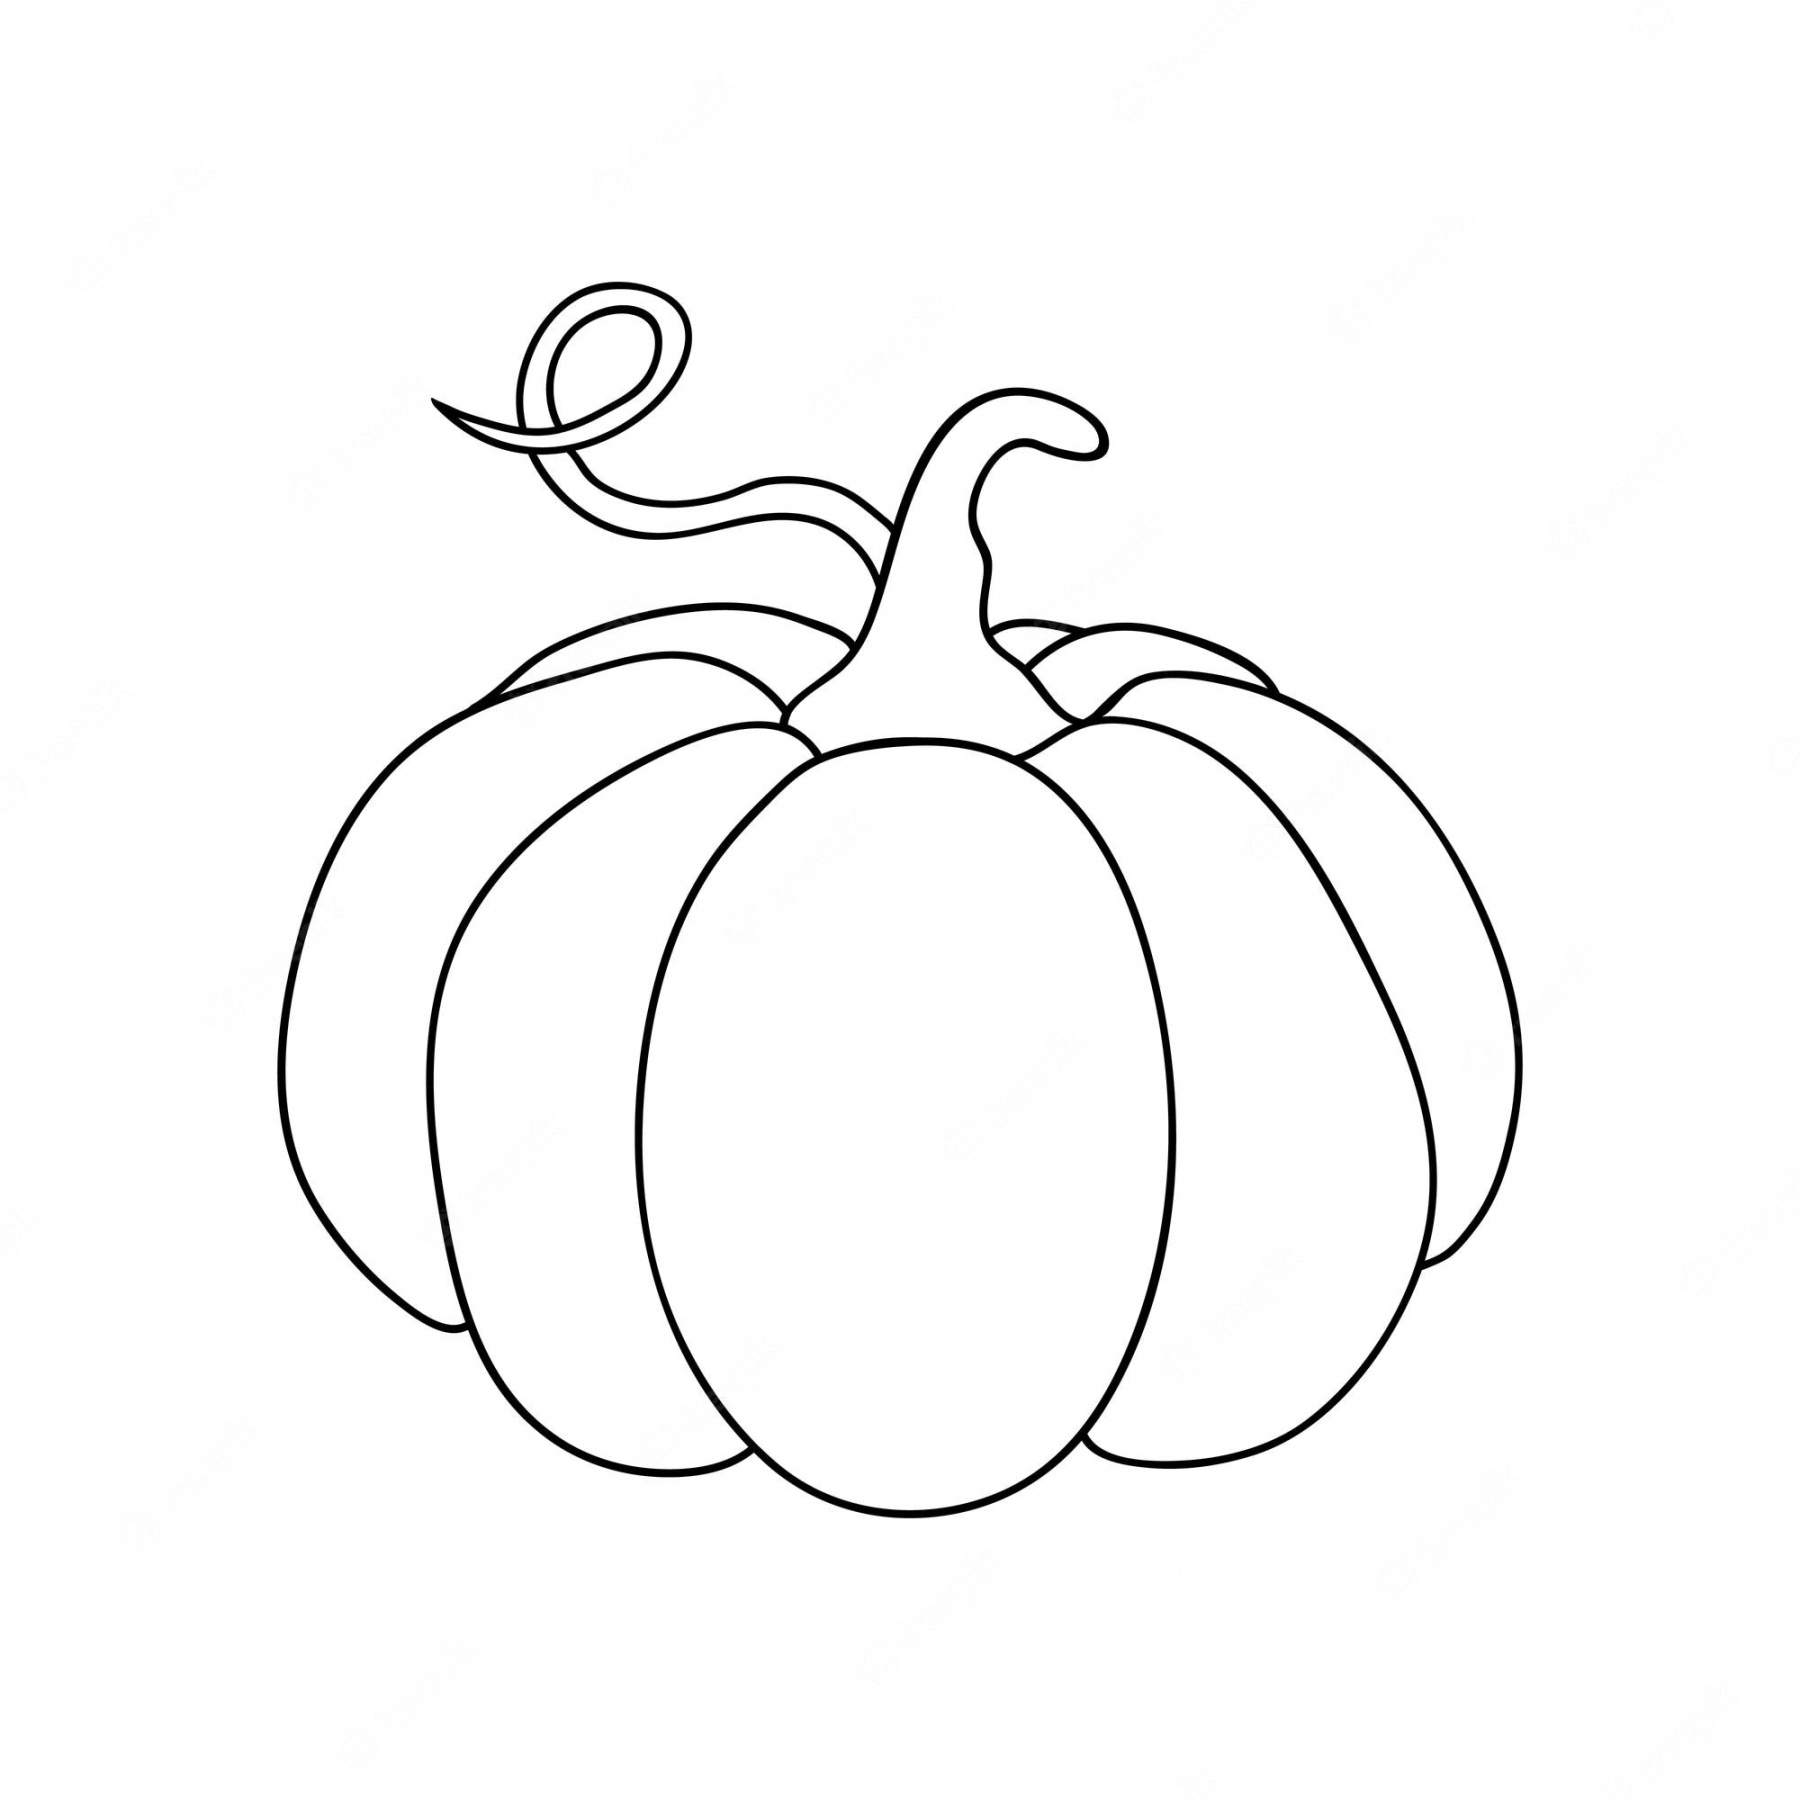 Premium Vector  Pumpkin icon outline in simple line drawings  - FREE Printables - Simple Pumpkin Outline